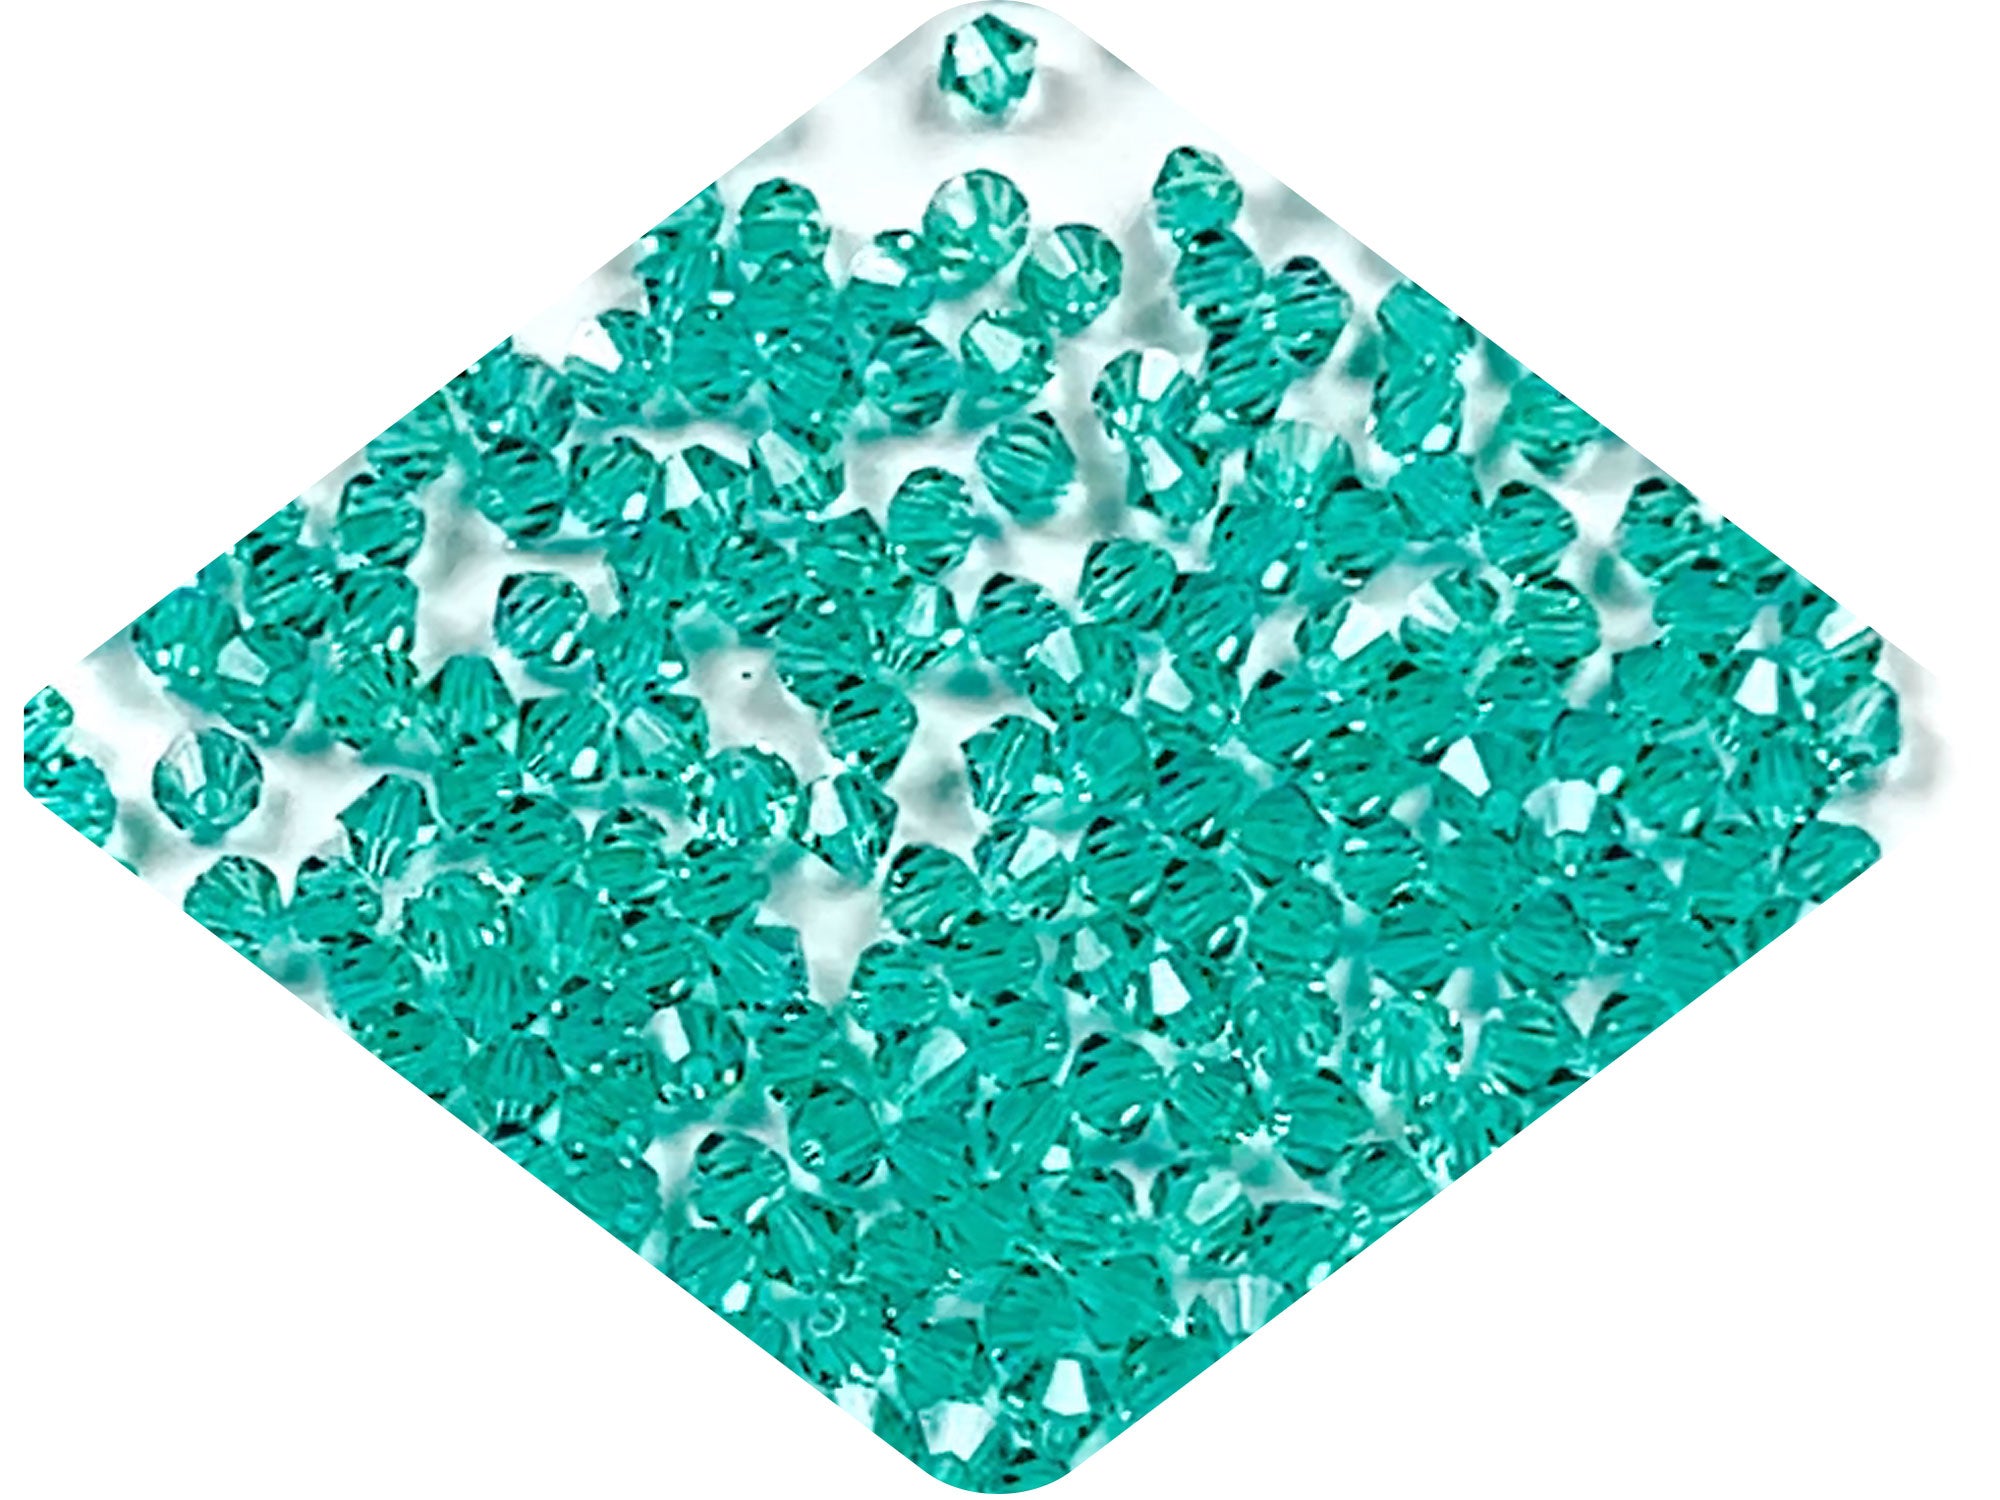 Caribbean Sea (Preciosa color), Czech Glass Beads, Machine Cut Bicones (MC Rondell, Diamond Shape), blue green crystals